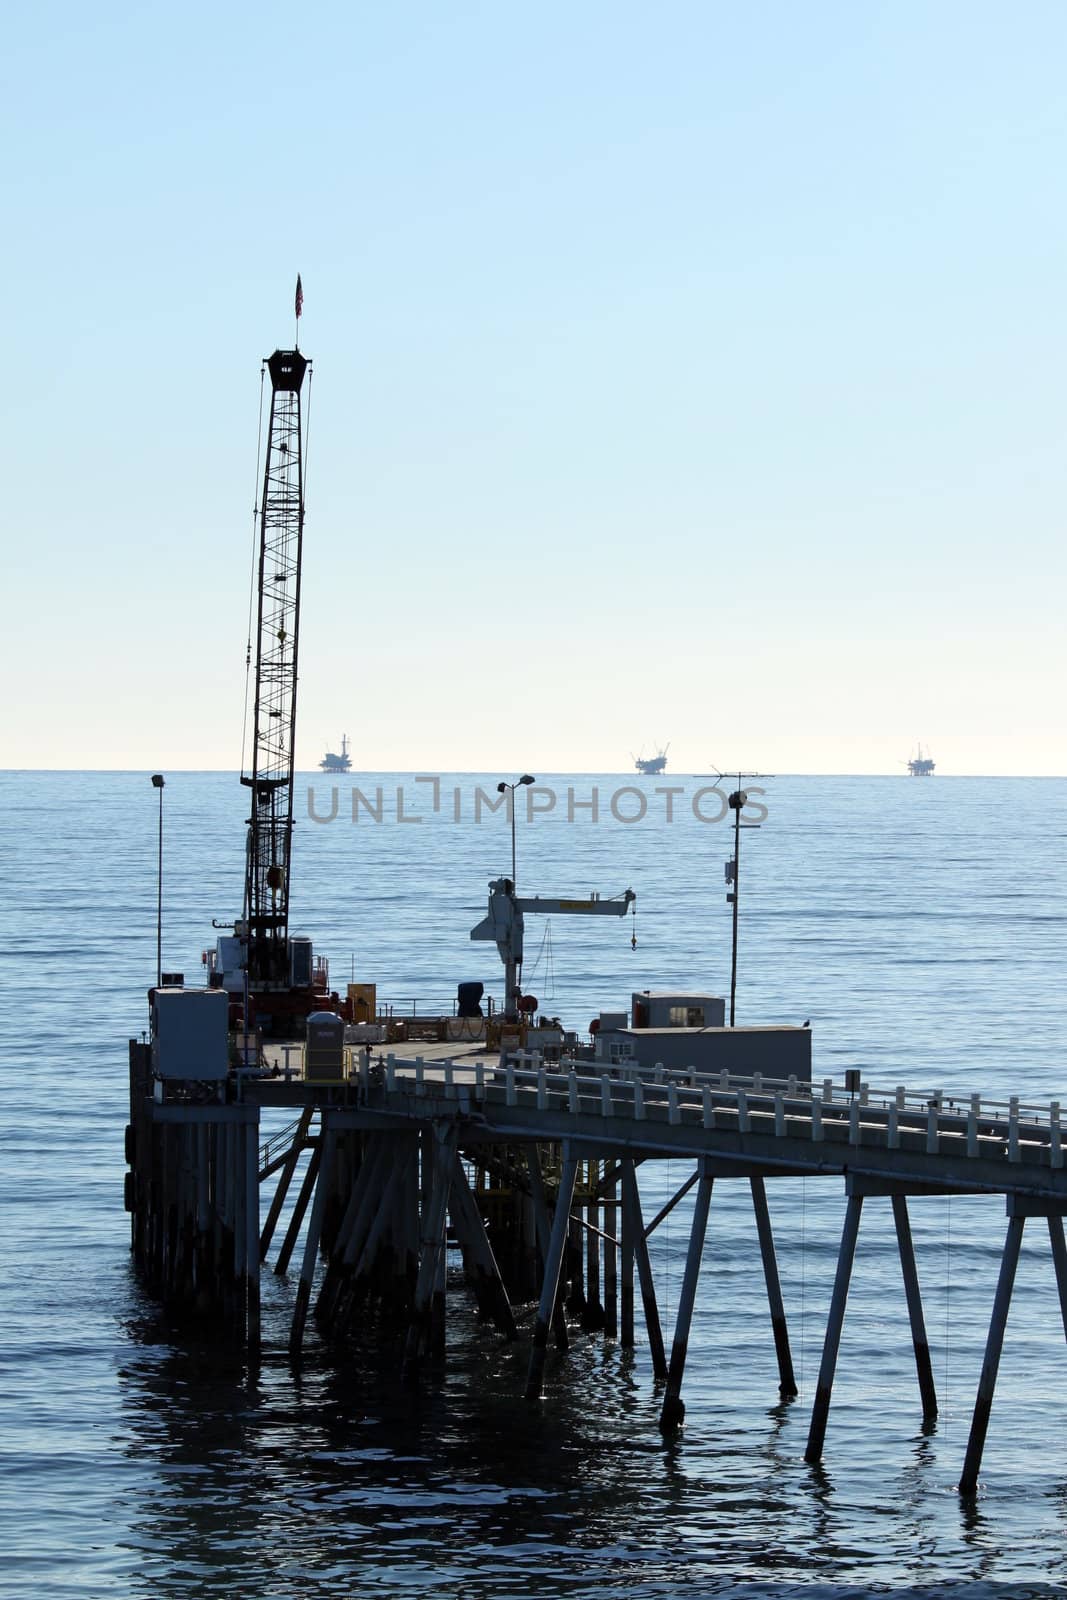 Carpinteria Pier with oil rigs at the horizon line